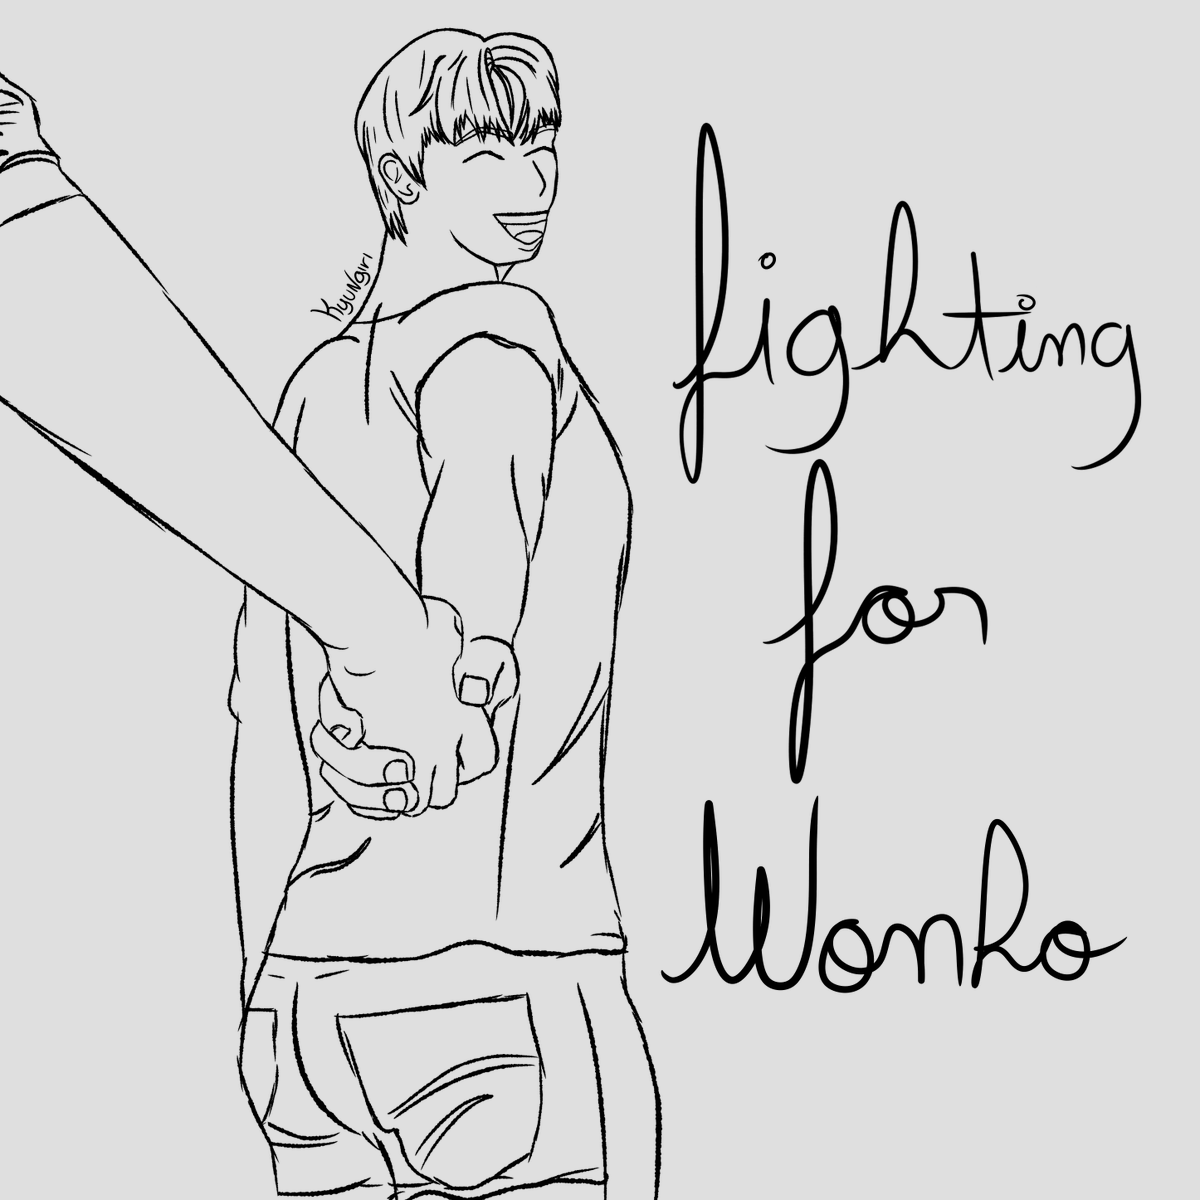 Monbebe will always stay by your side ♥ 

#MonstaX #Wonho #FightingForWonho #WonhoComeback #ForWonho #WonhoWeGotYourBack #WonhoWeLoveYou #MonbebeWontBackDown #MonbebeUniteForChange #변화를_위해_싸우다 #art @OfficialMonstaX